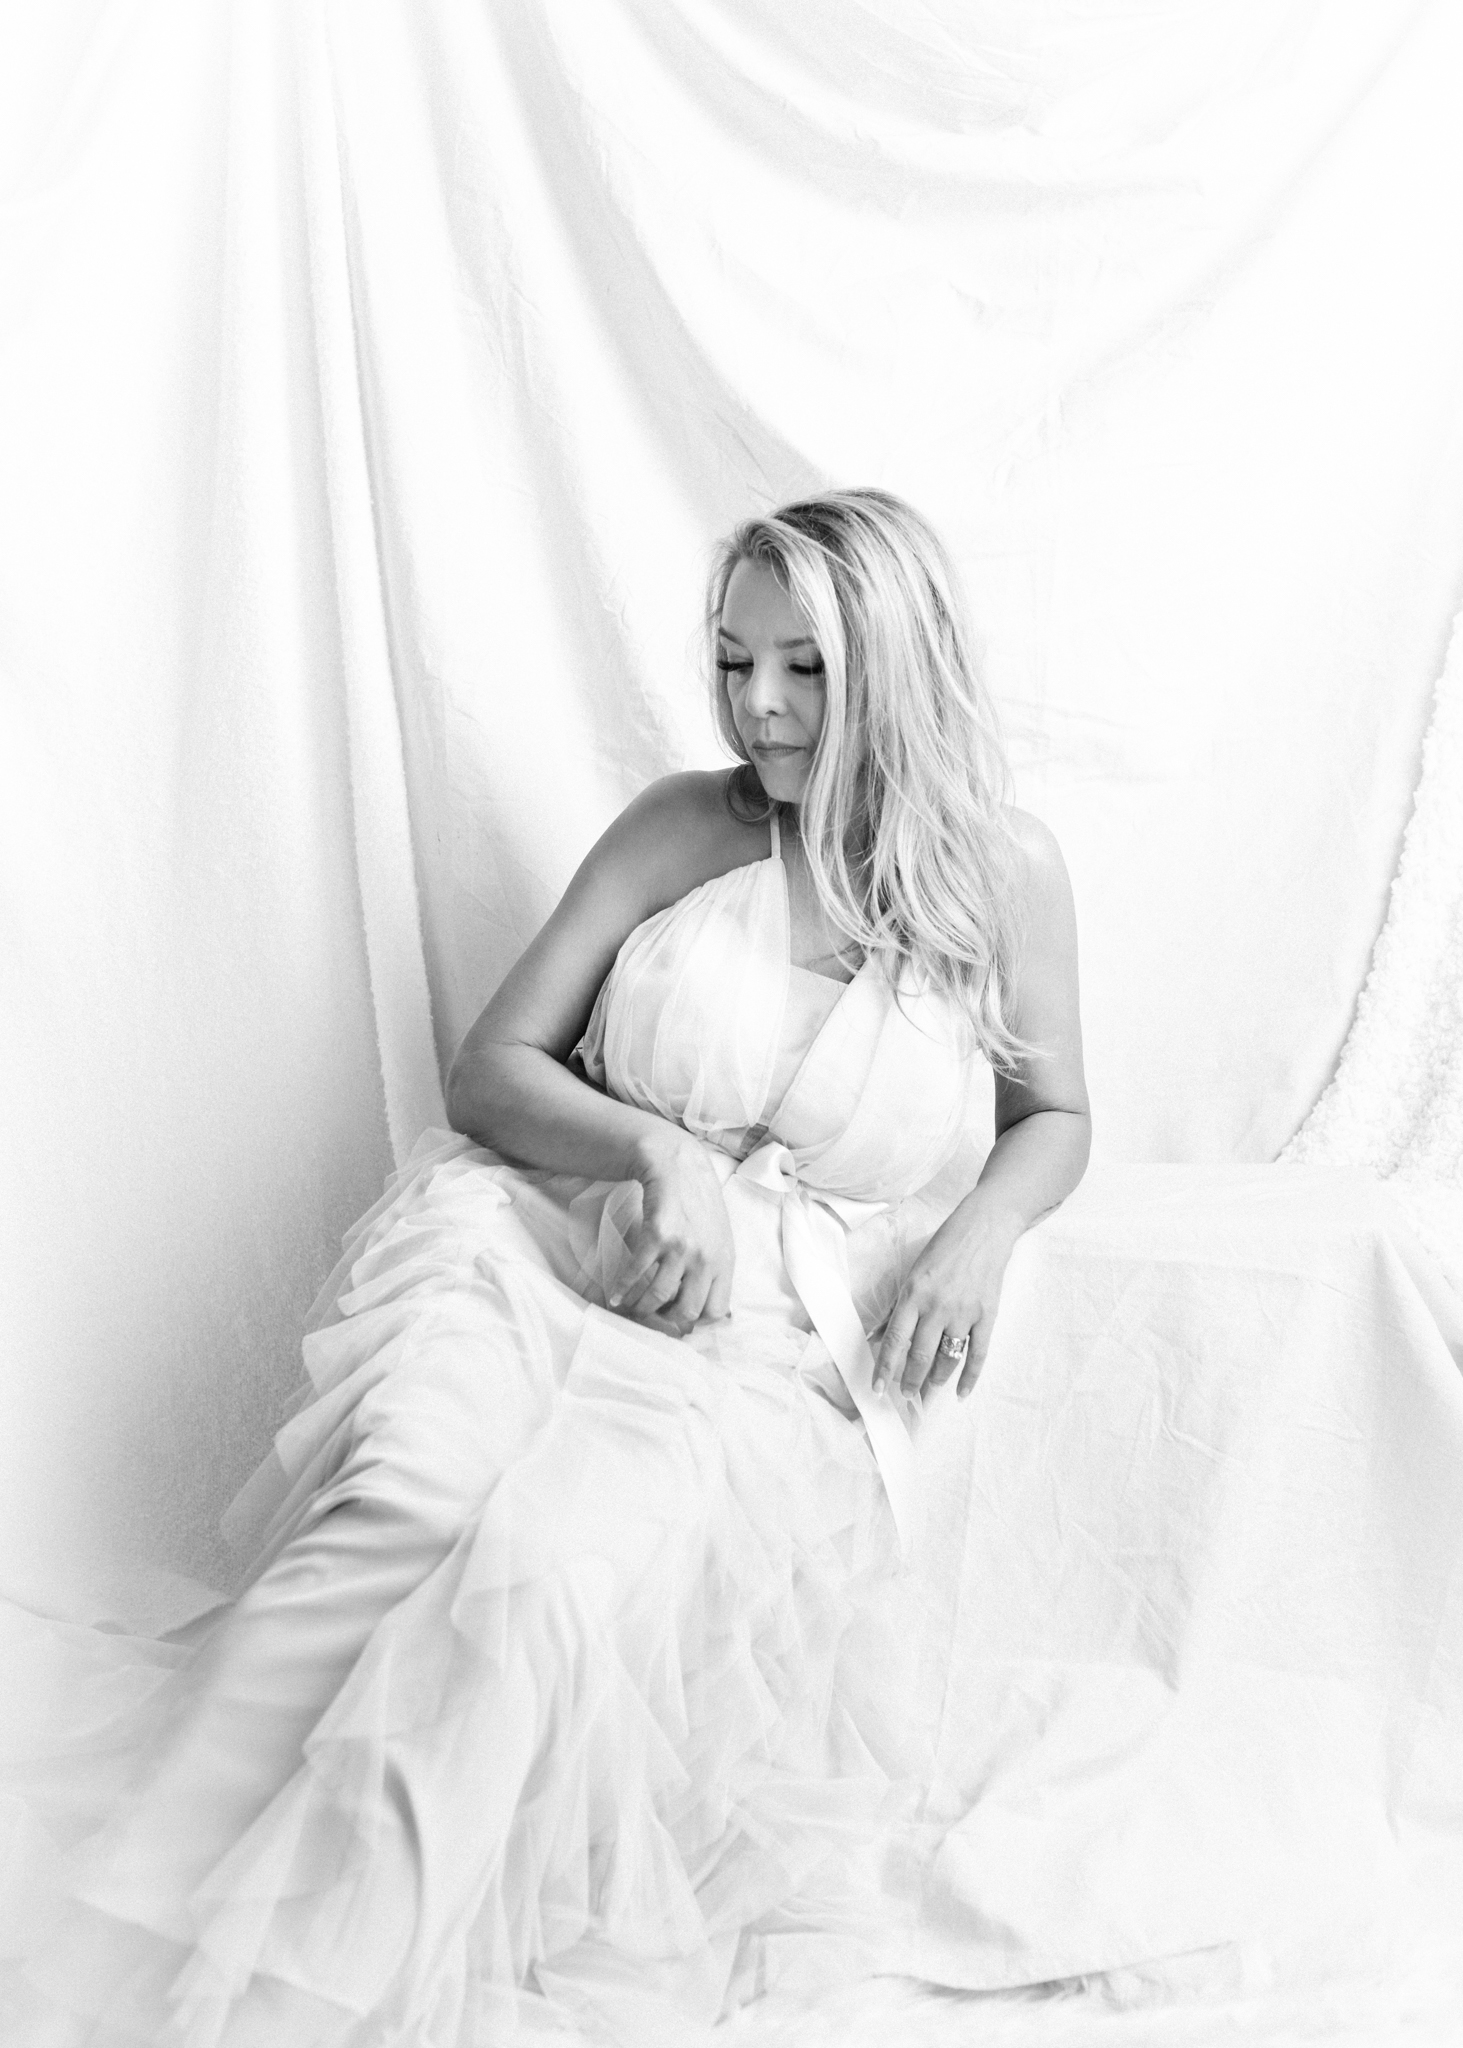 Blonde woman wearing white dress in a B&W photo